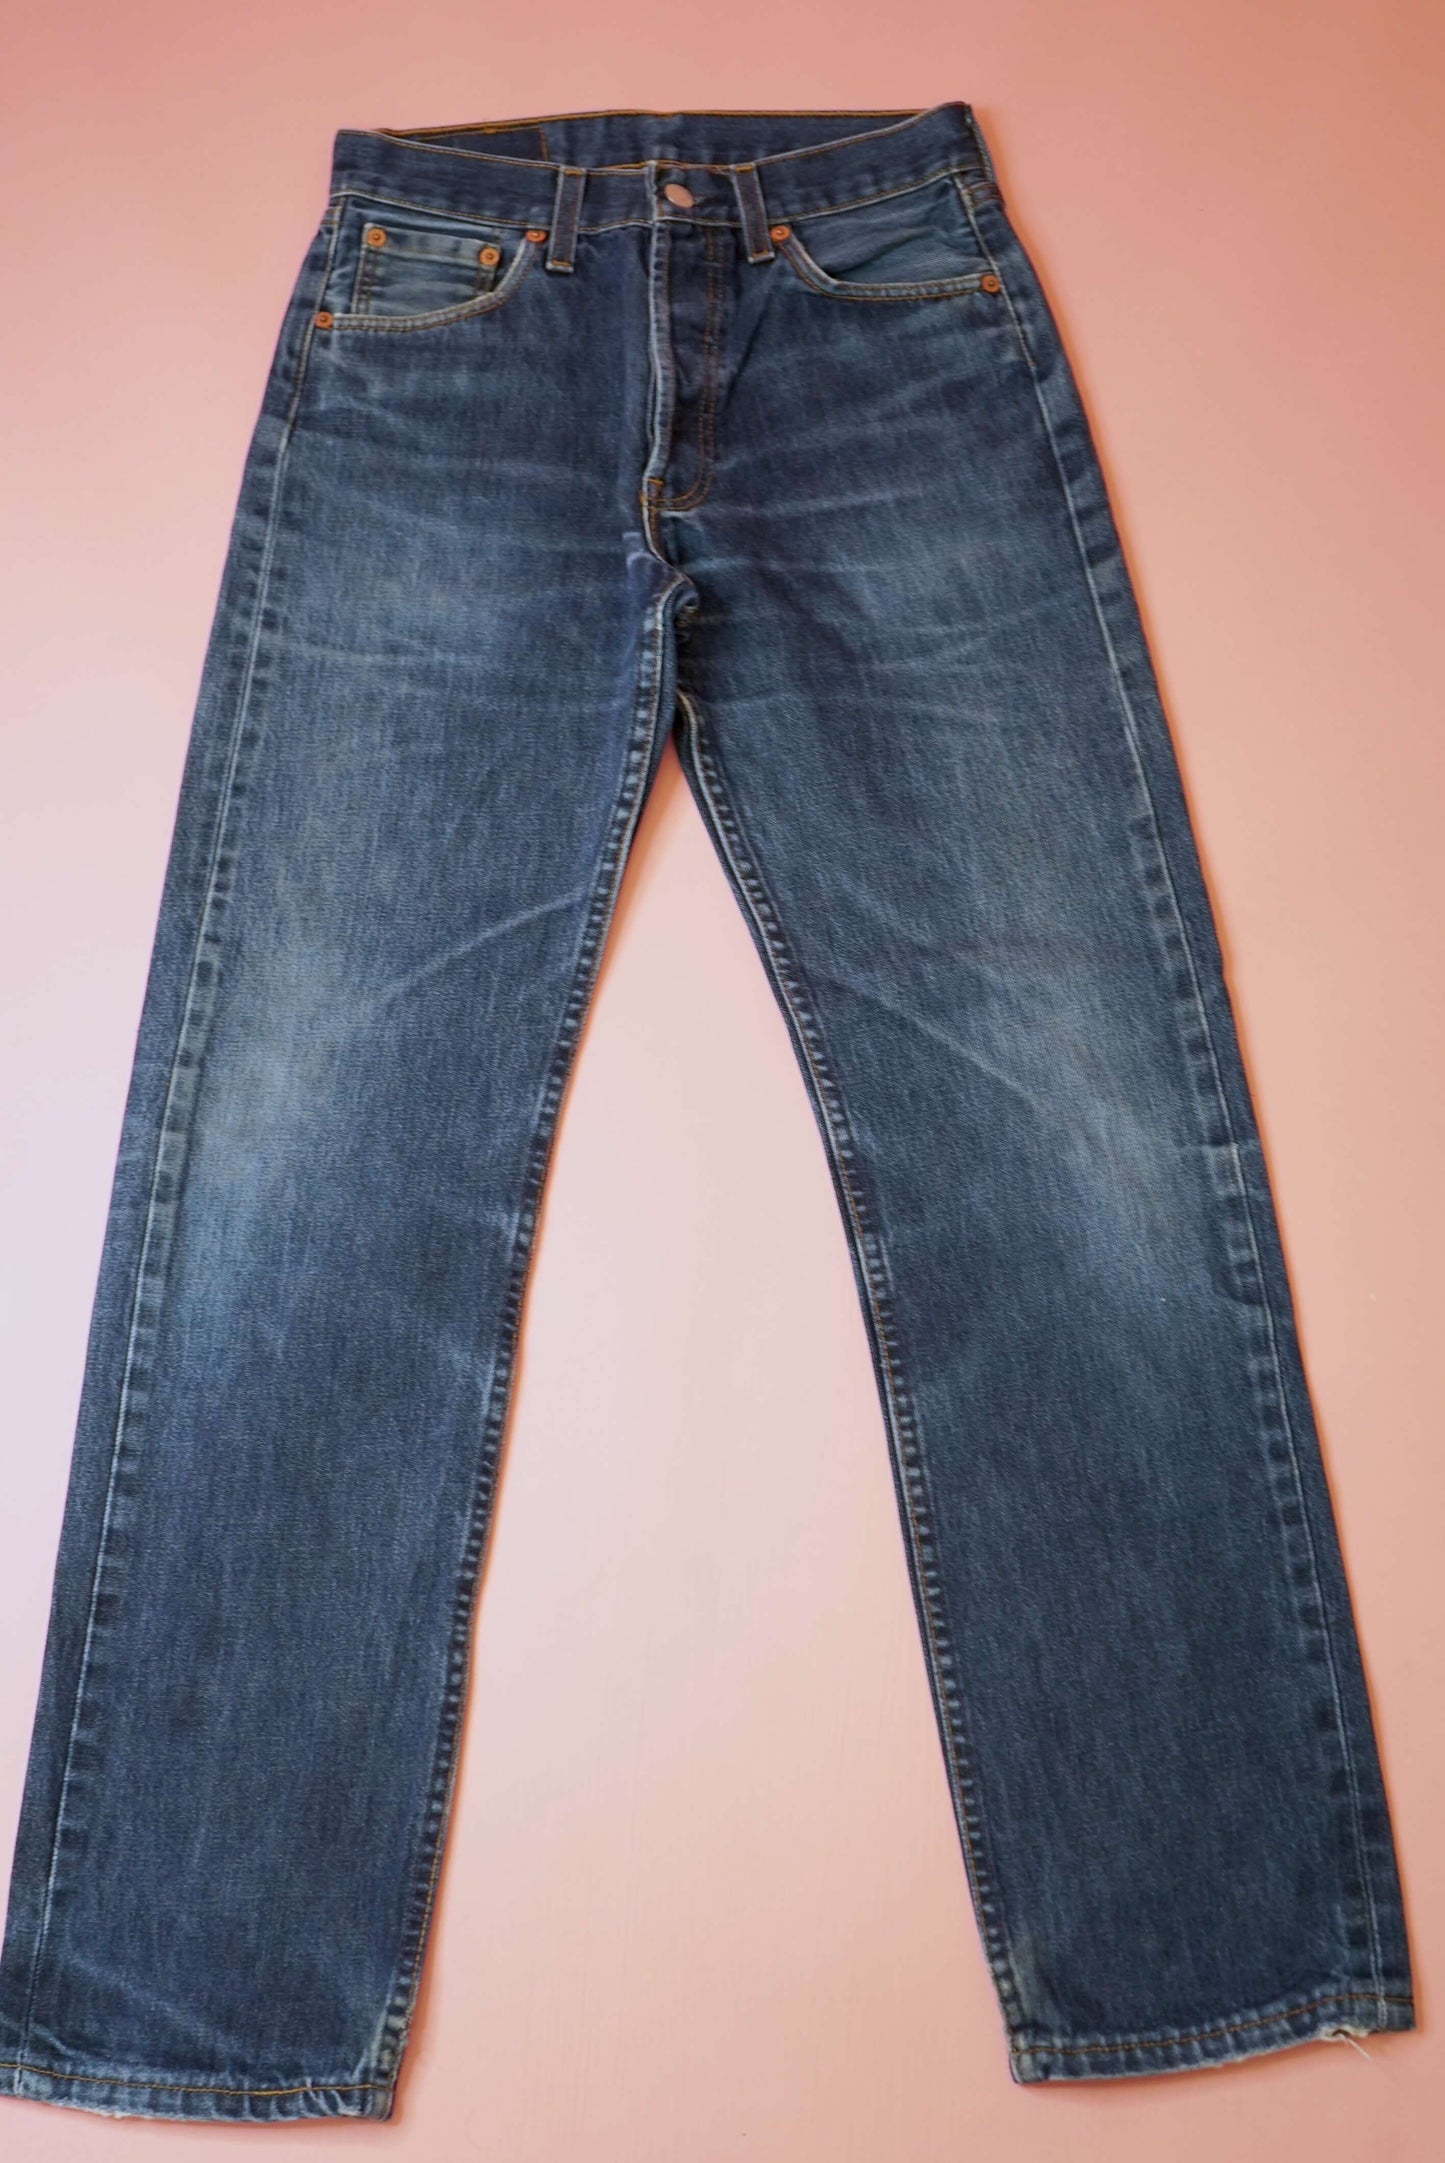 Vintage Levis 501 Jeans Dark Blue Faded Distressed W28